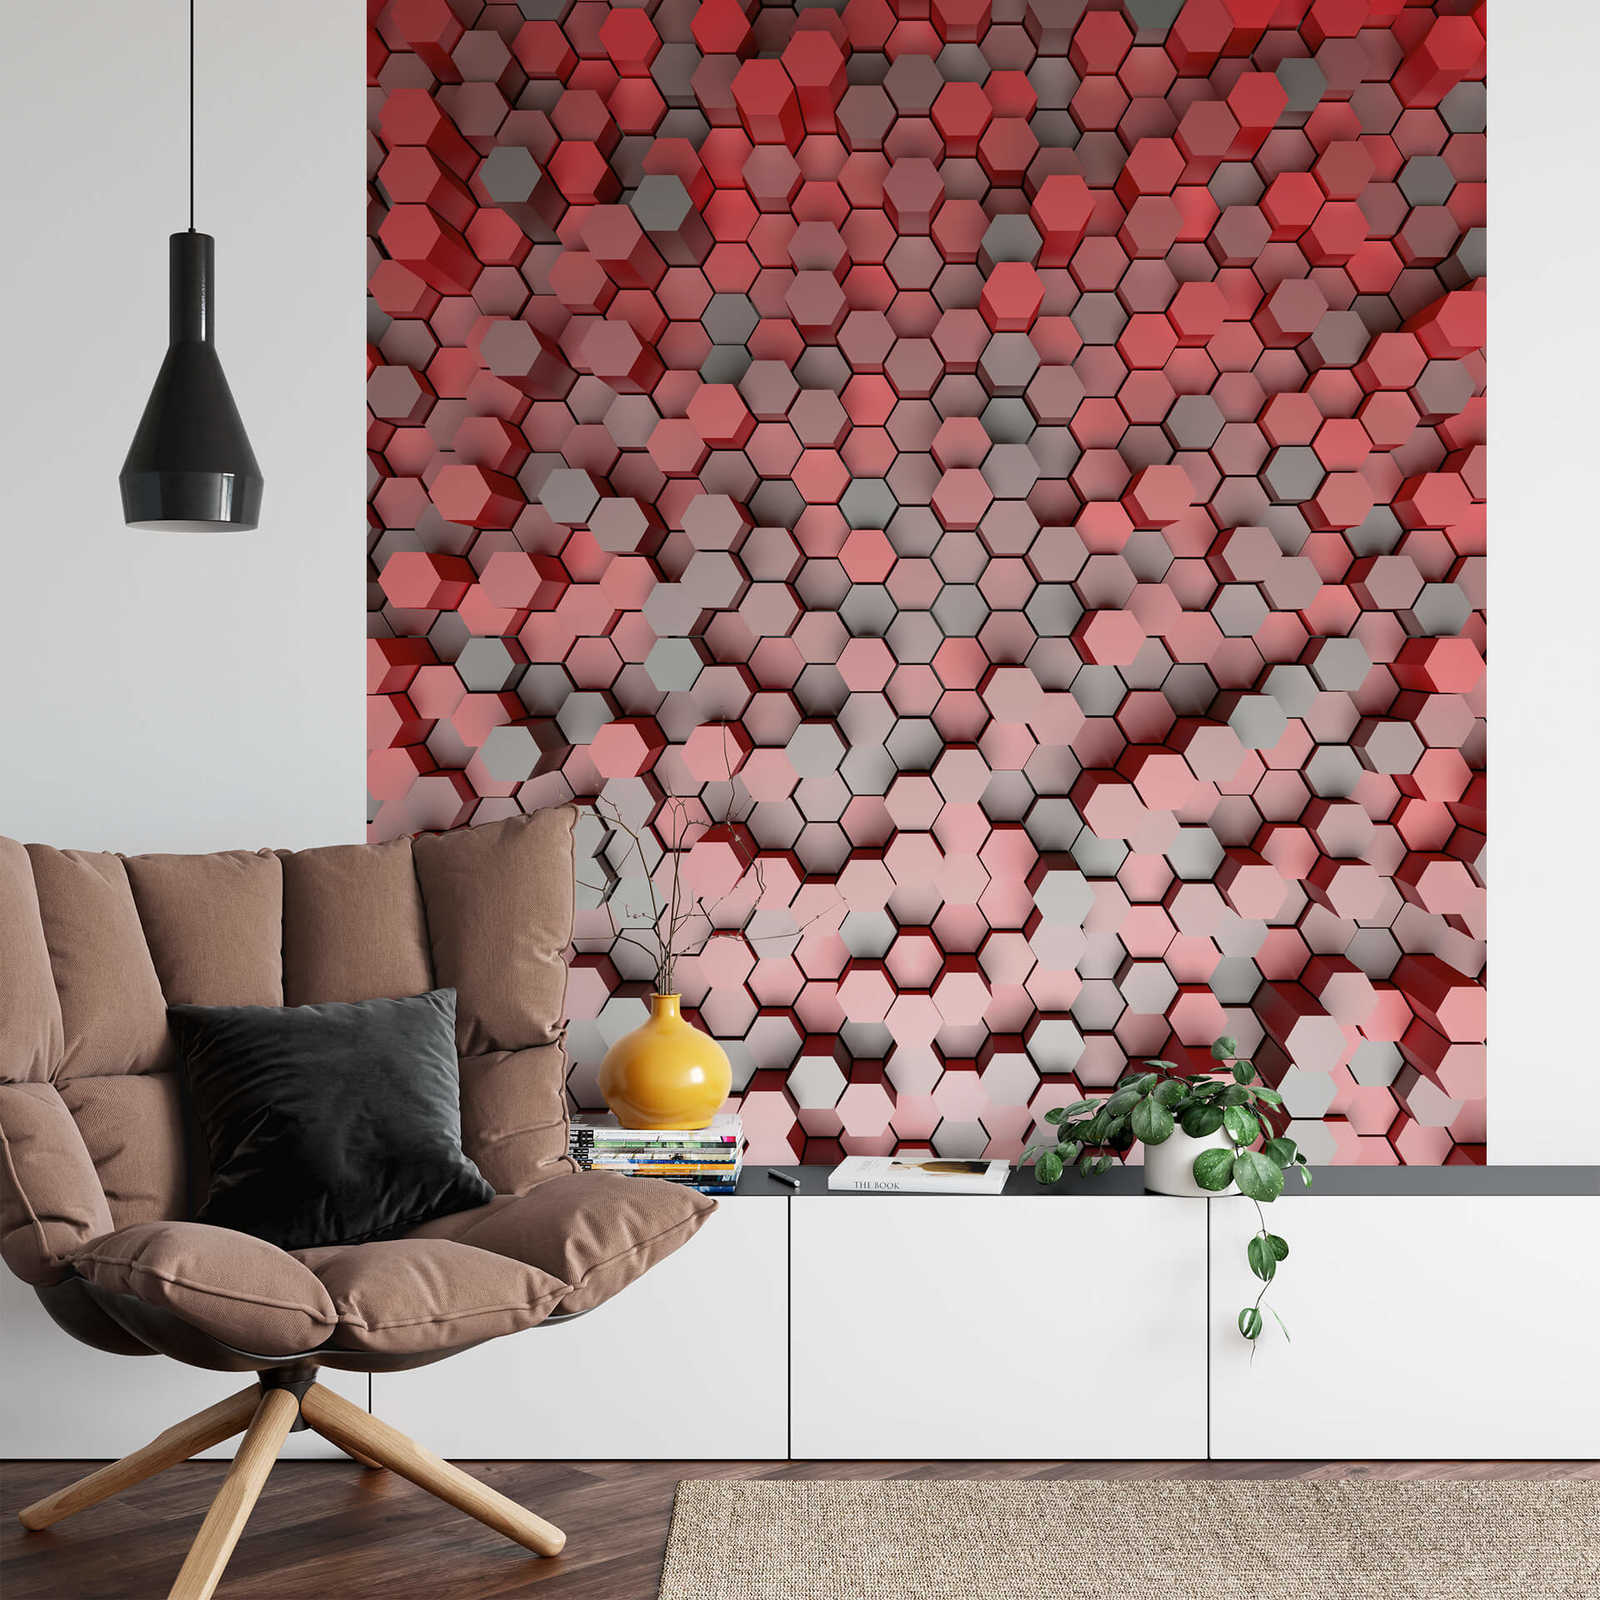             3D Fototapete Hexagon Grafik-Design – Rot, Grau
        